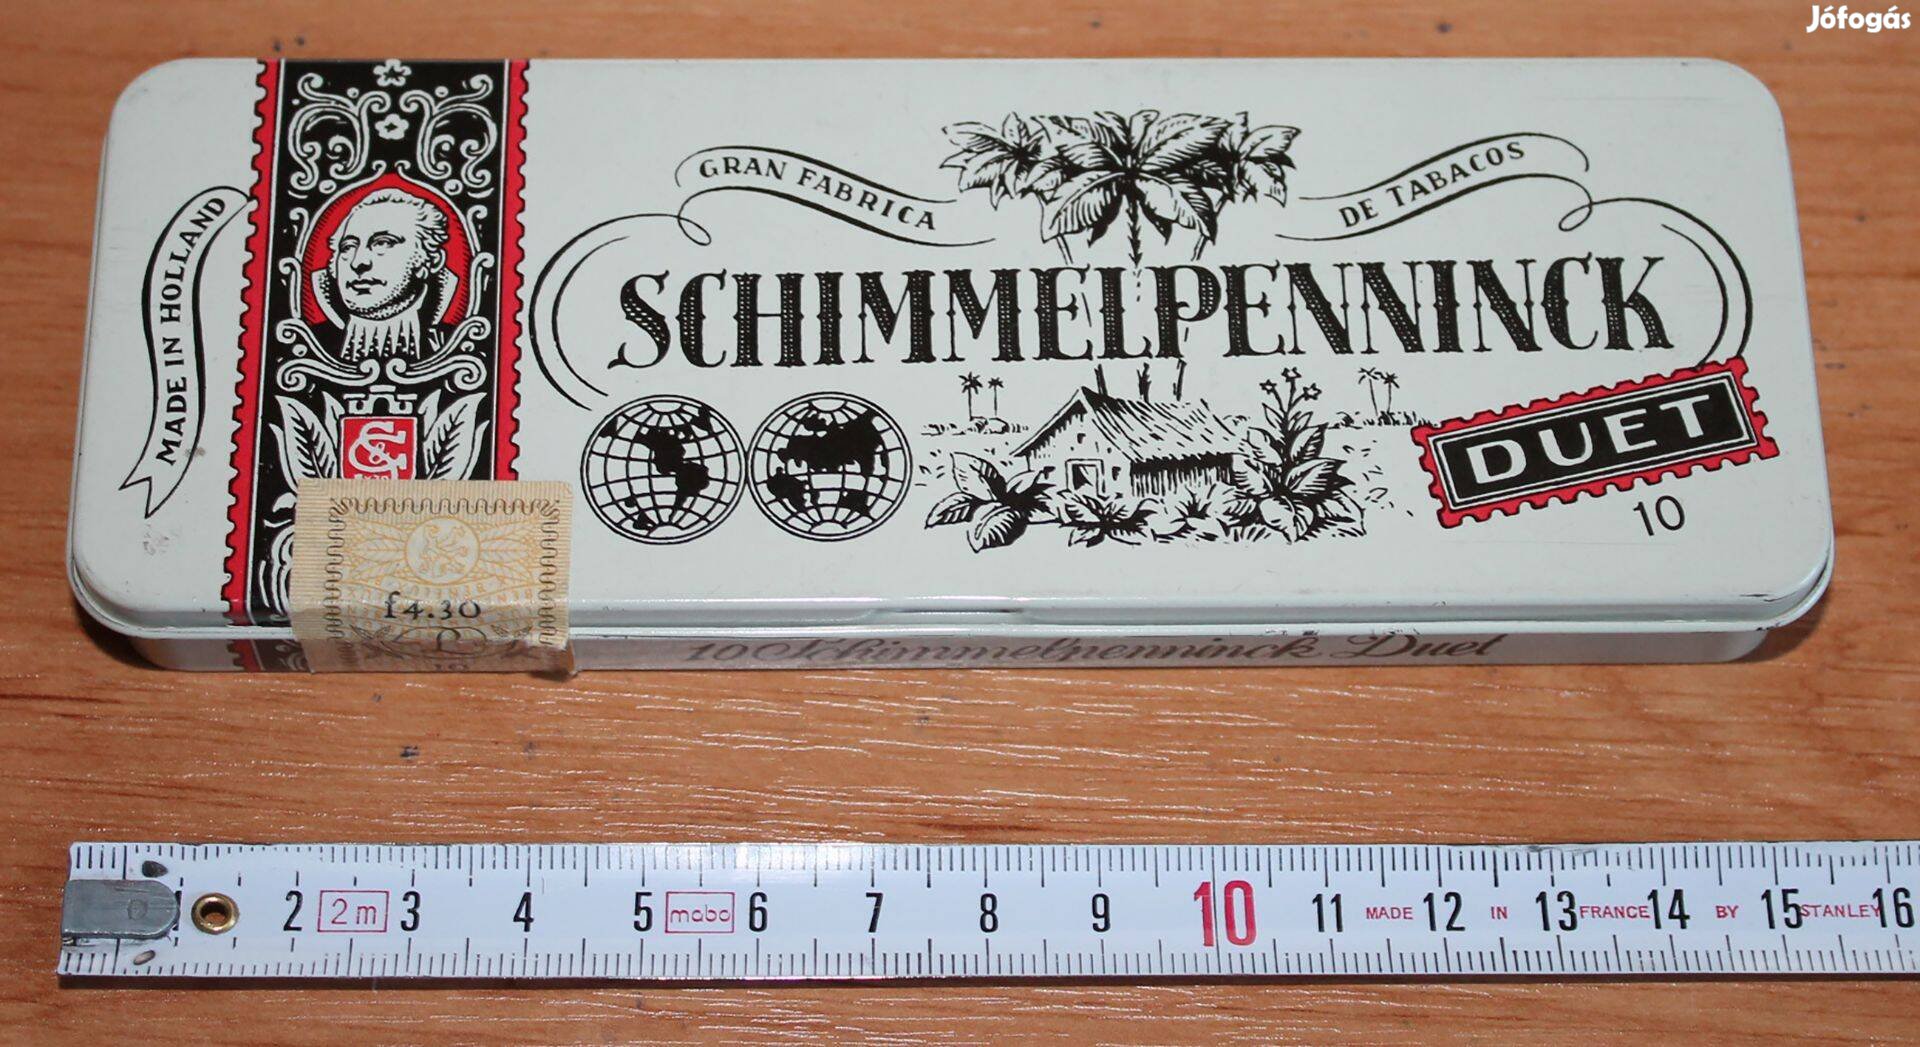 Retro holland Schimmelpenninck Duet fém doboz fémdoboz bádog